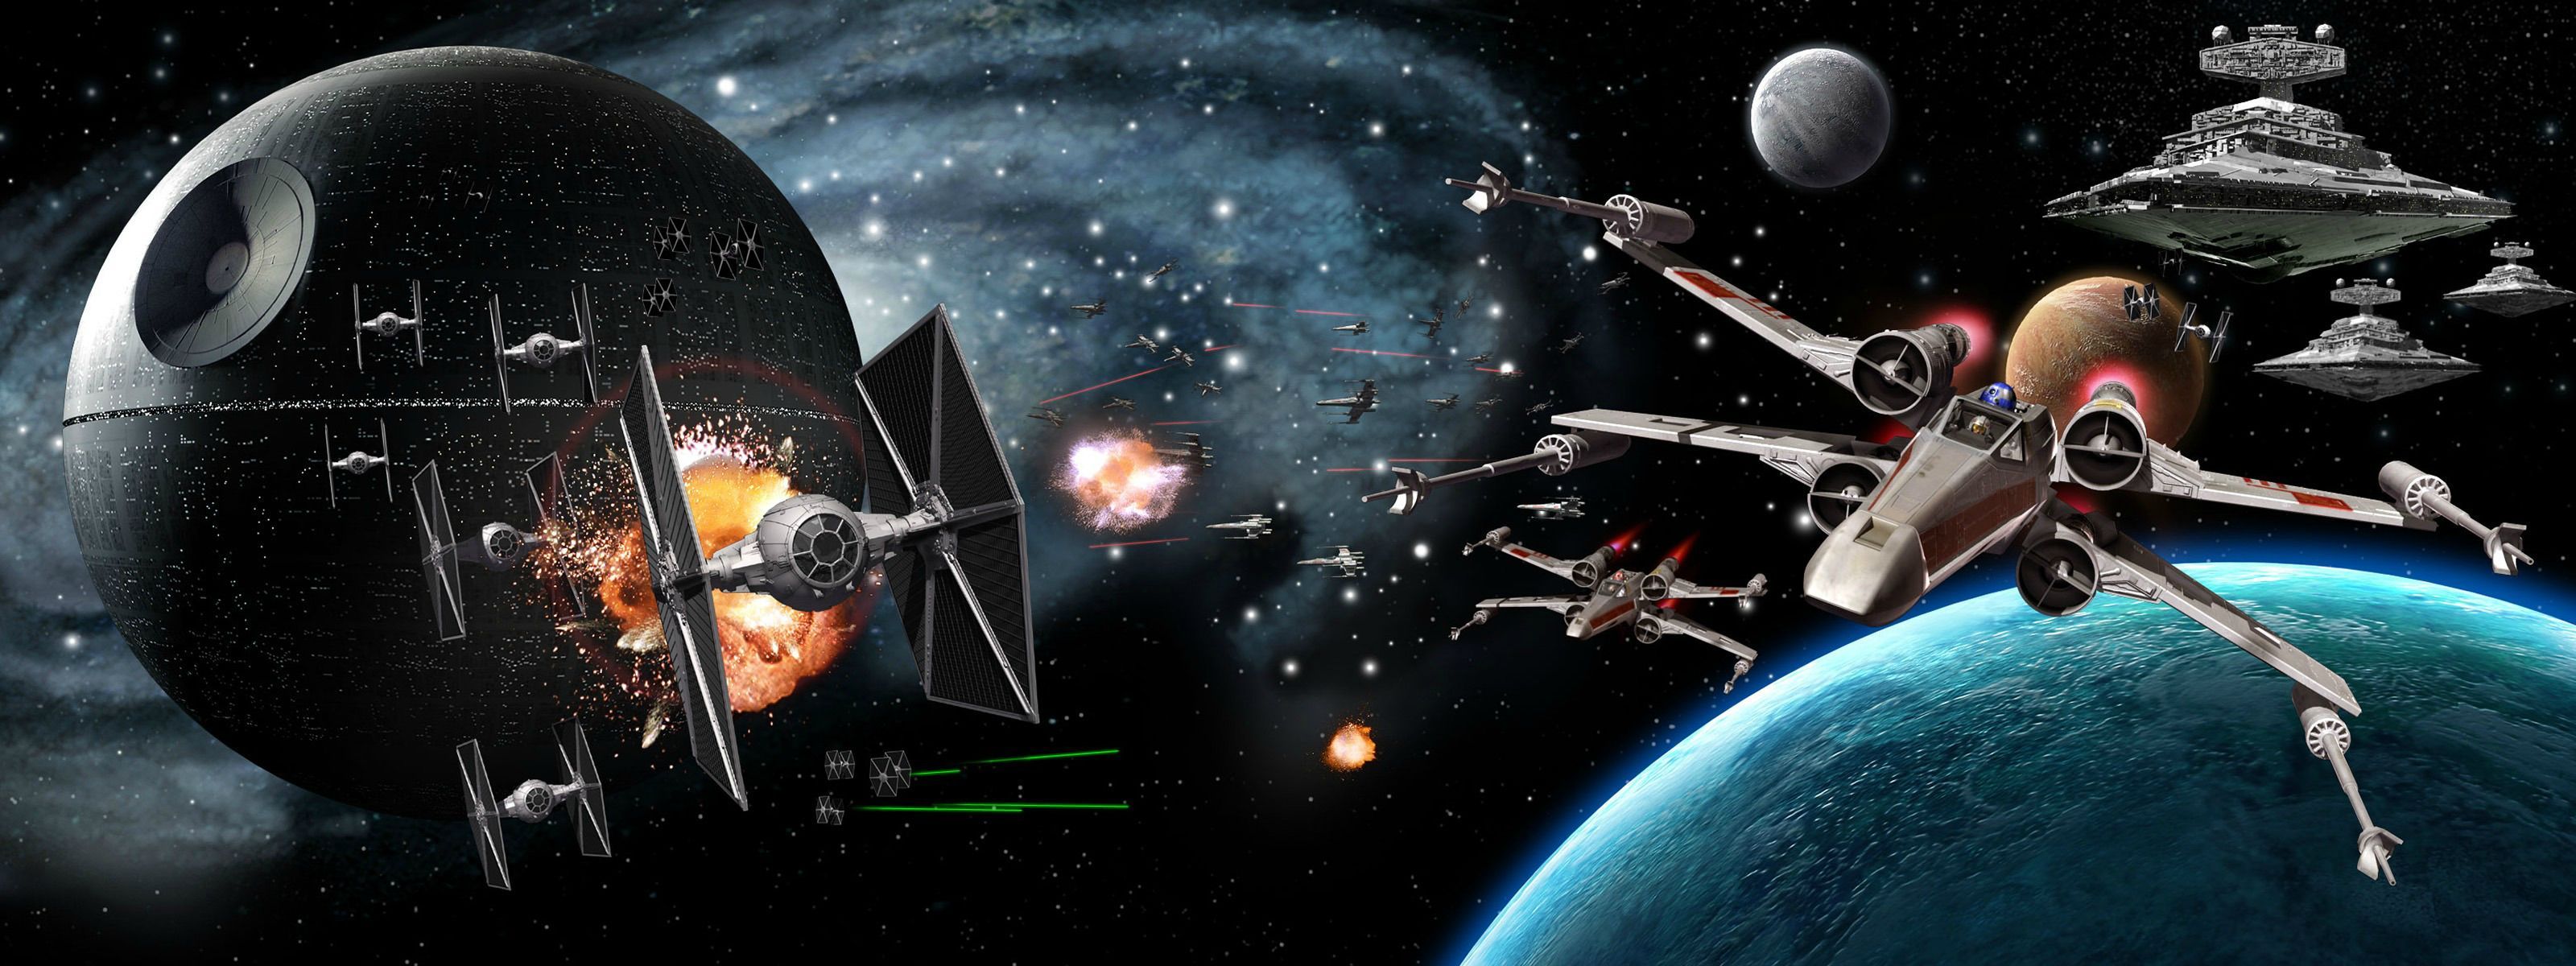 Dual Screen Background Star Wars Space Battles